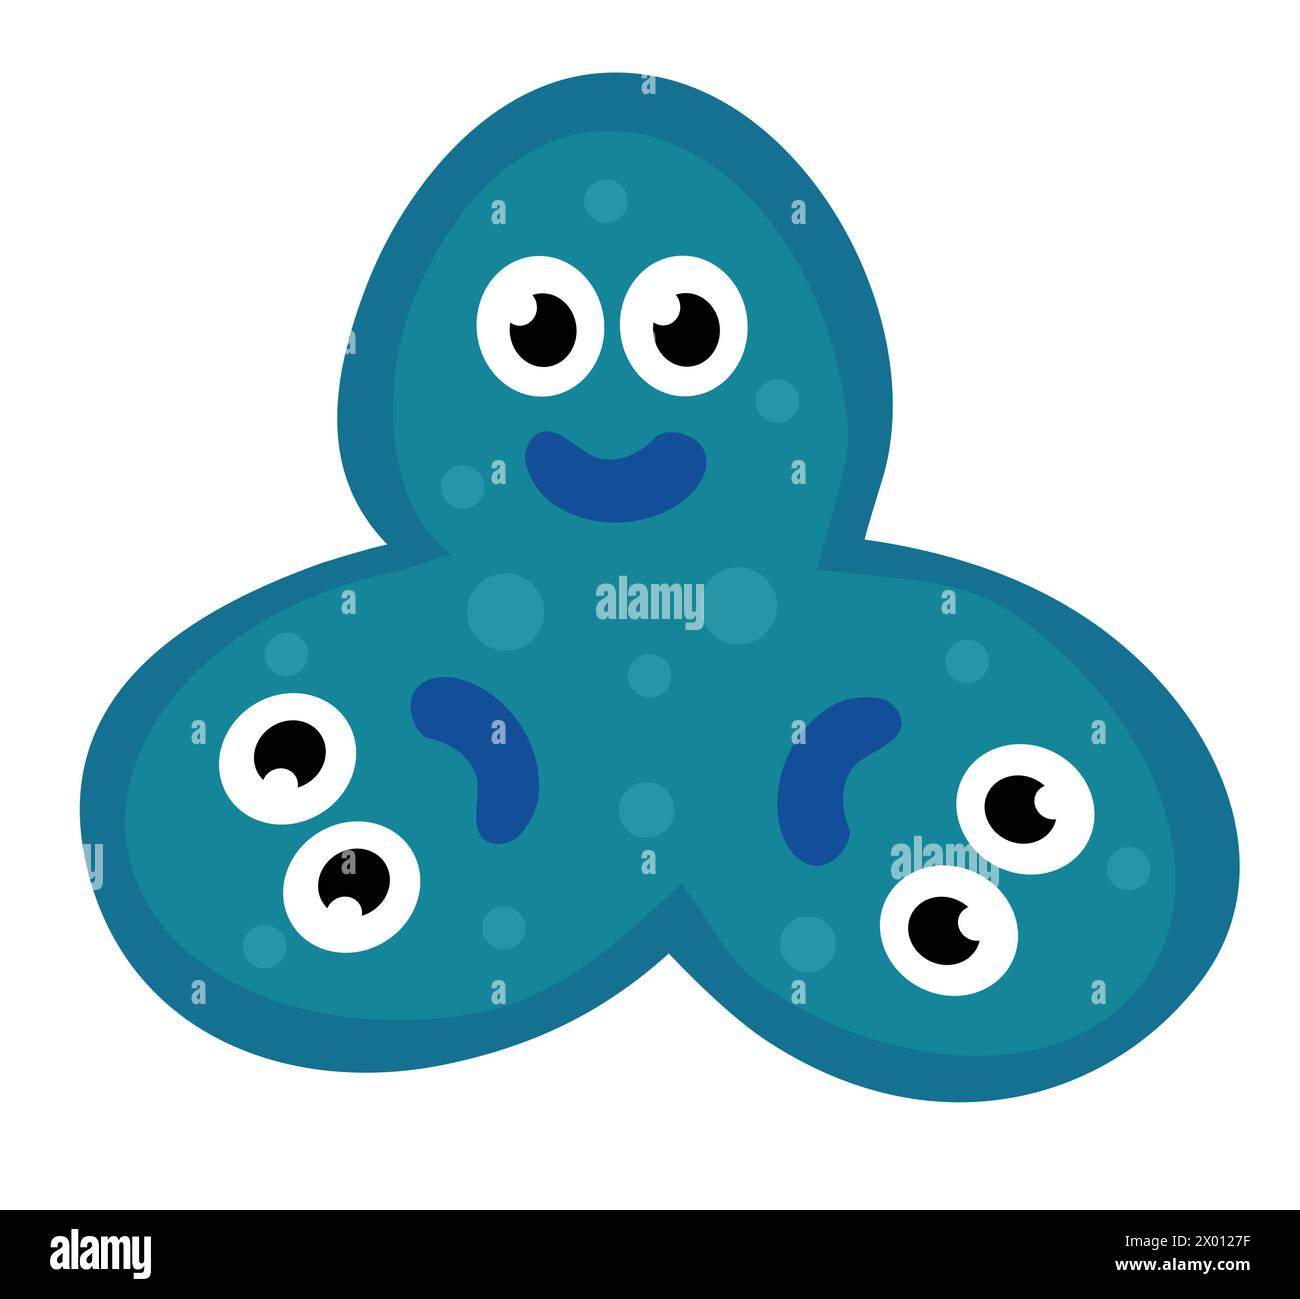 Cute cartoon blue character bacteria, microbe, germ. Microbiology organism. Mascot expressing emotion. Vector children illustration in flat design. Stock Vector